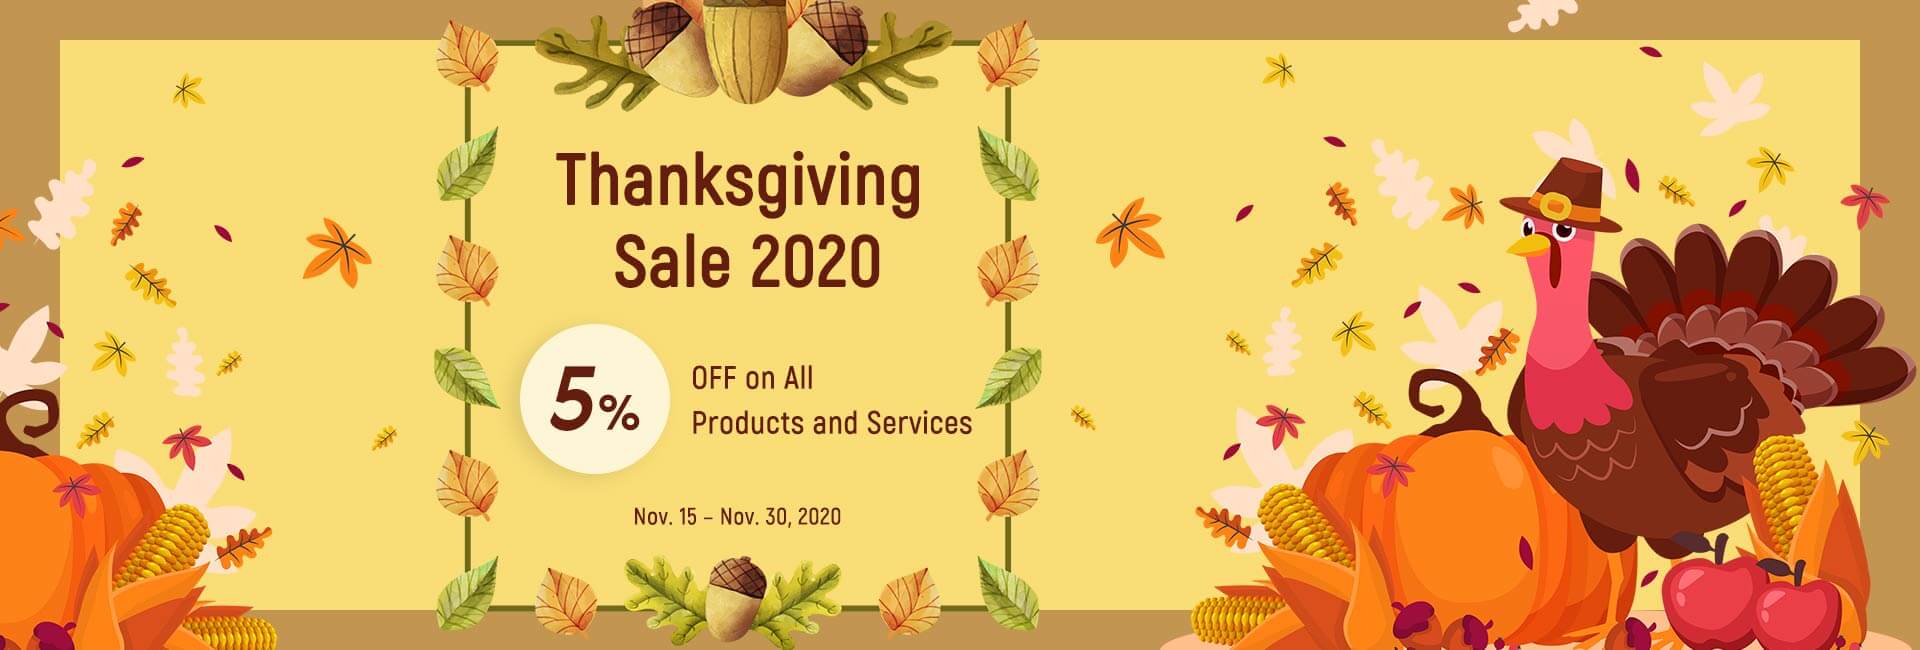 Thanksgiving Sale 2020